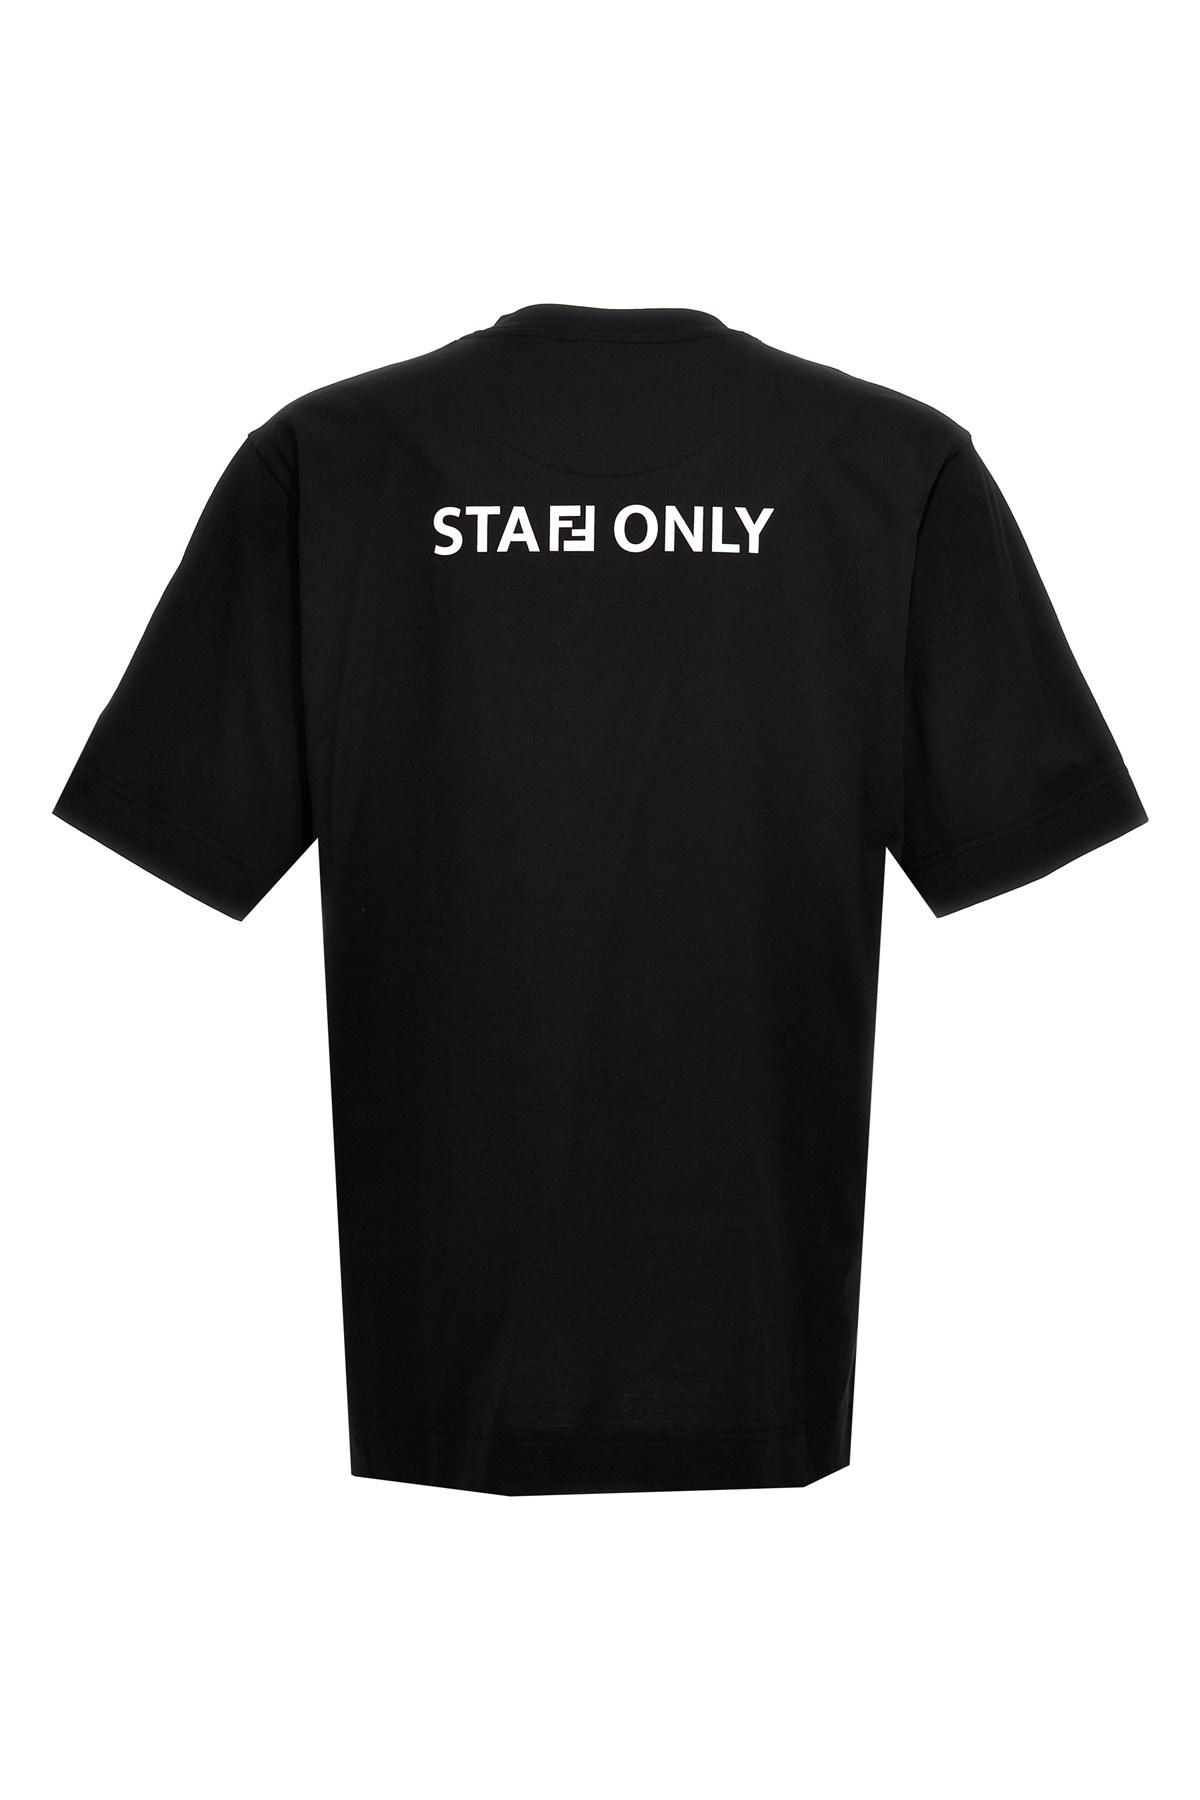 'Staff only' T-shirt - 2